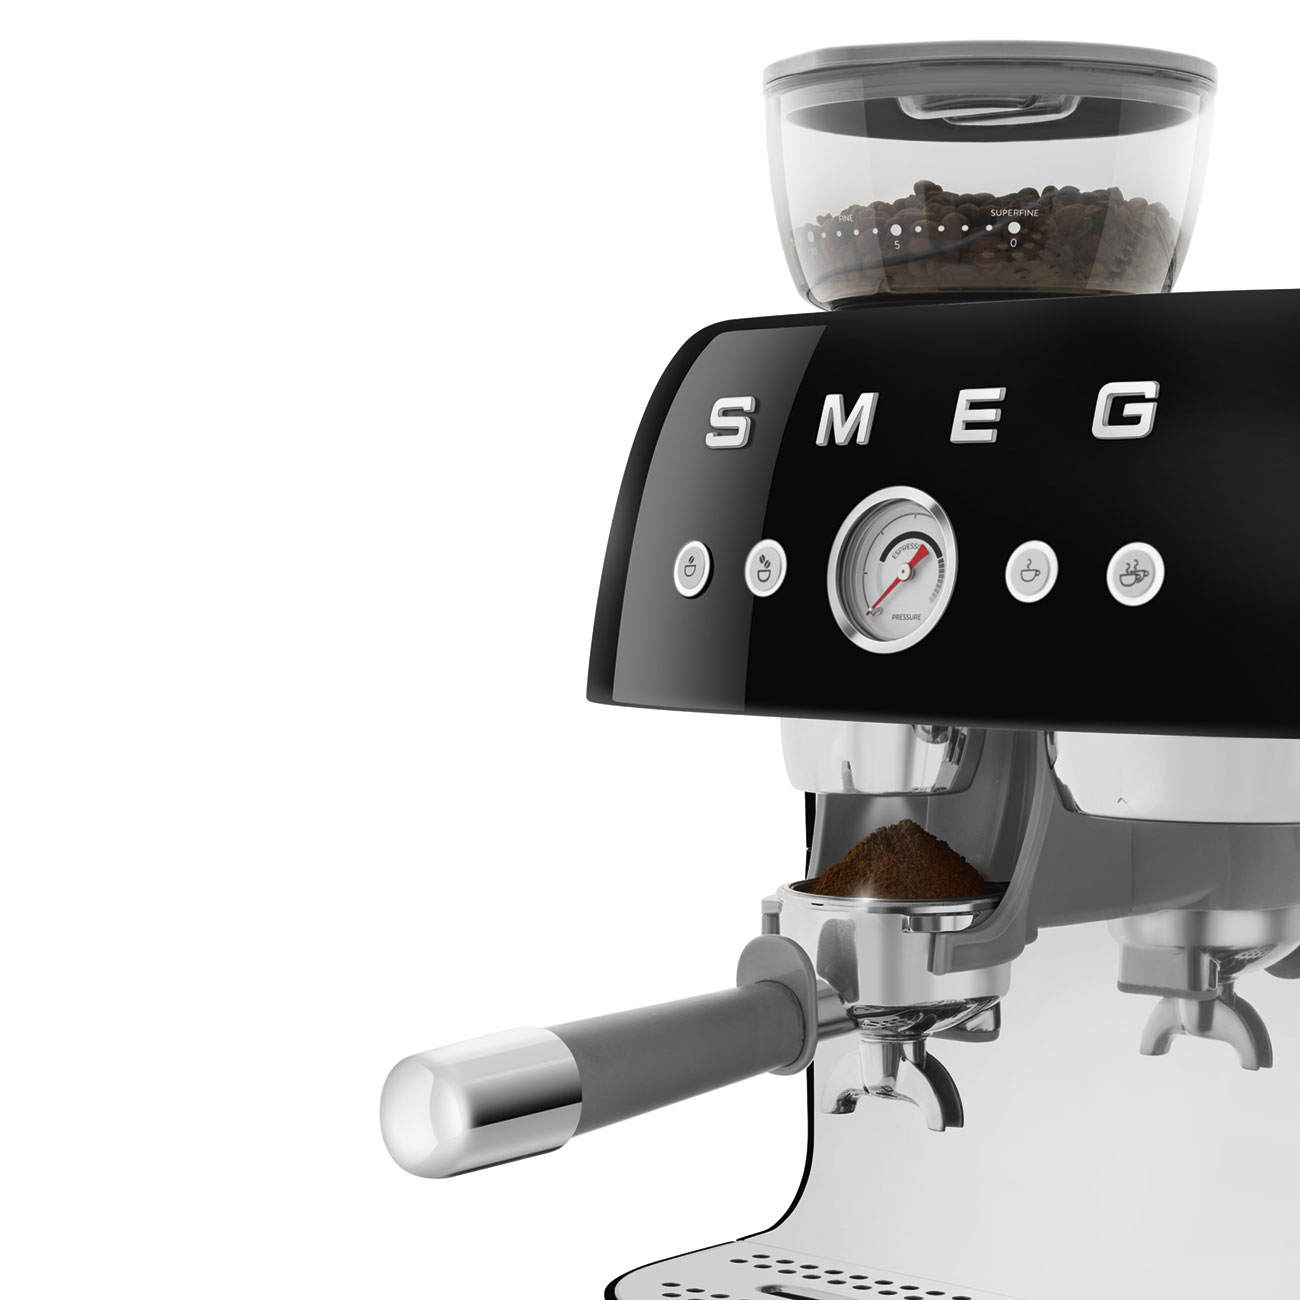 Smeg Black Espresso Manual Coffee Machine with Grinder_6